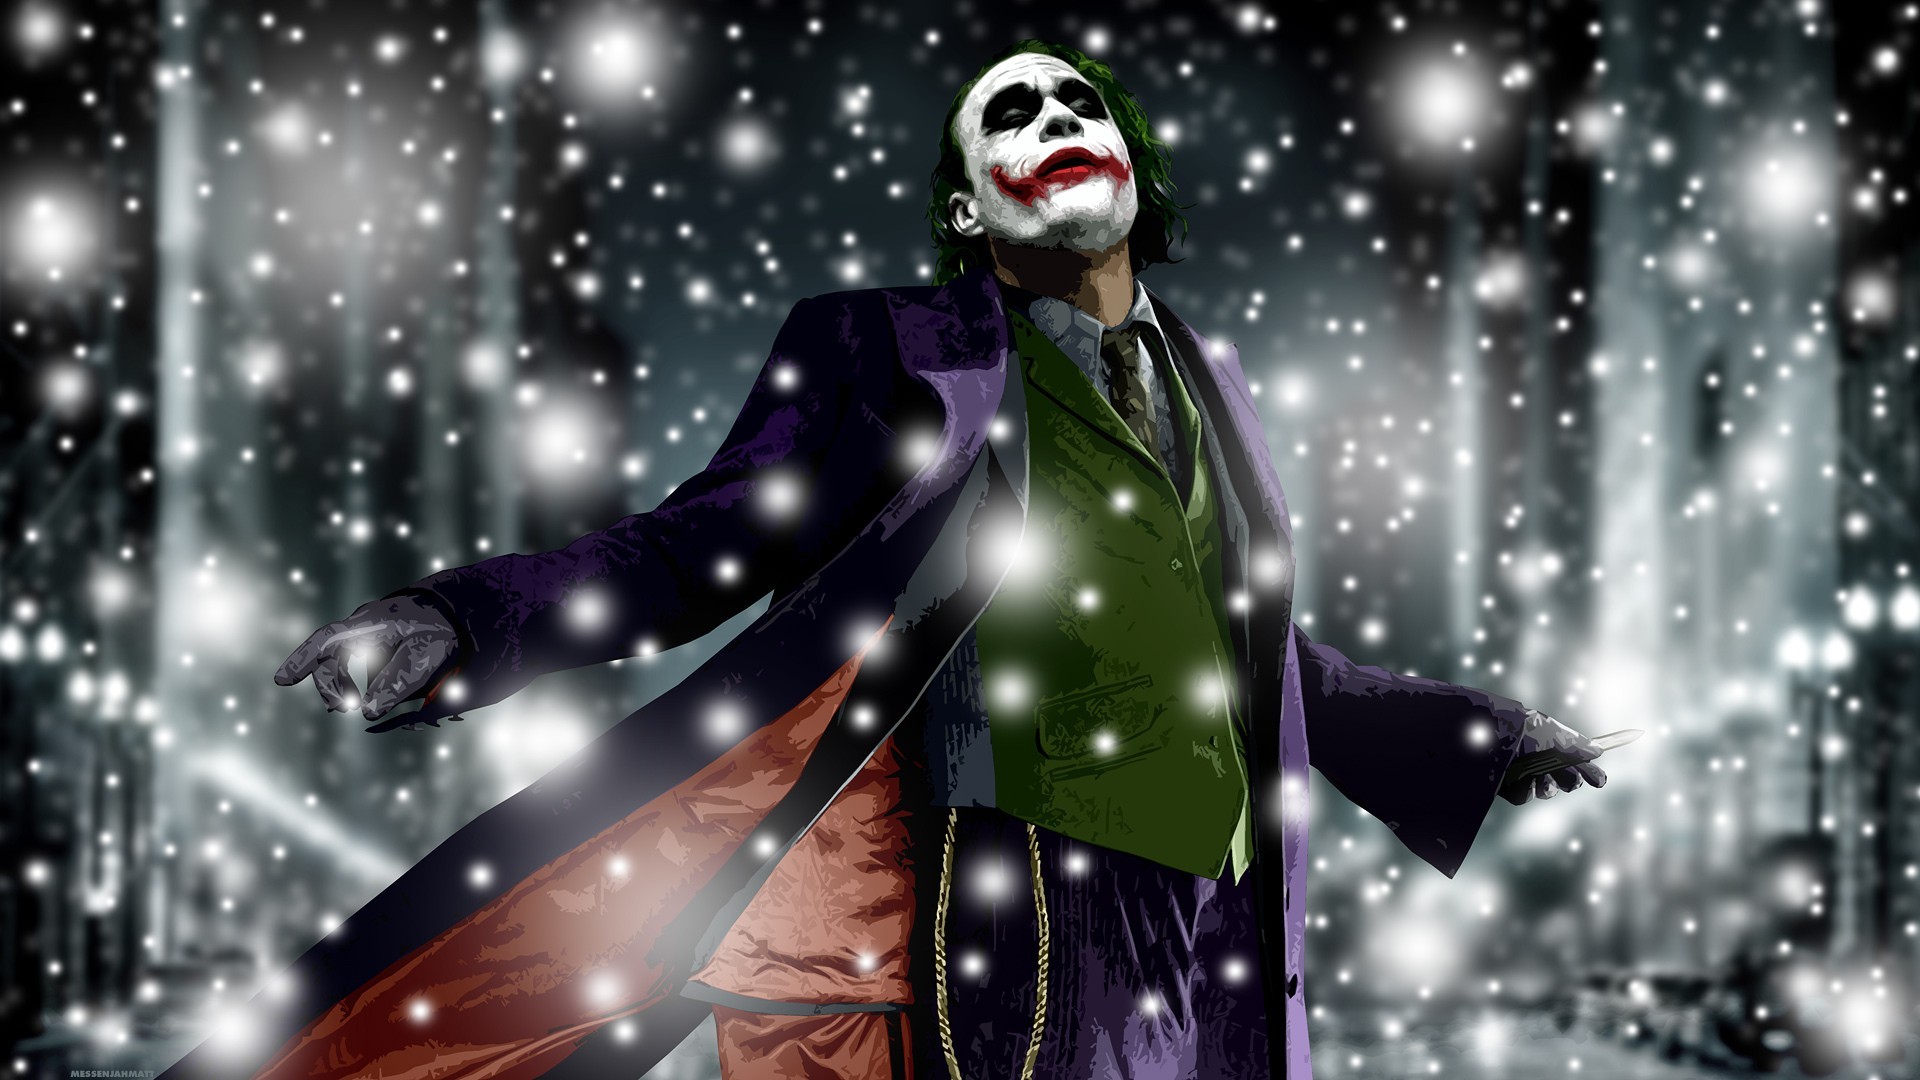 General 1920x1080 movies The Dark Knight Joker MessenjahMatt Heath Ledger villains actor deceased DC Comics Warner Brothers Christopher Nolan